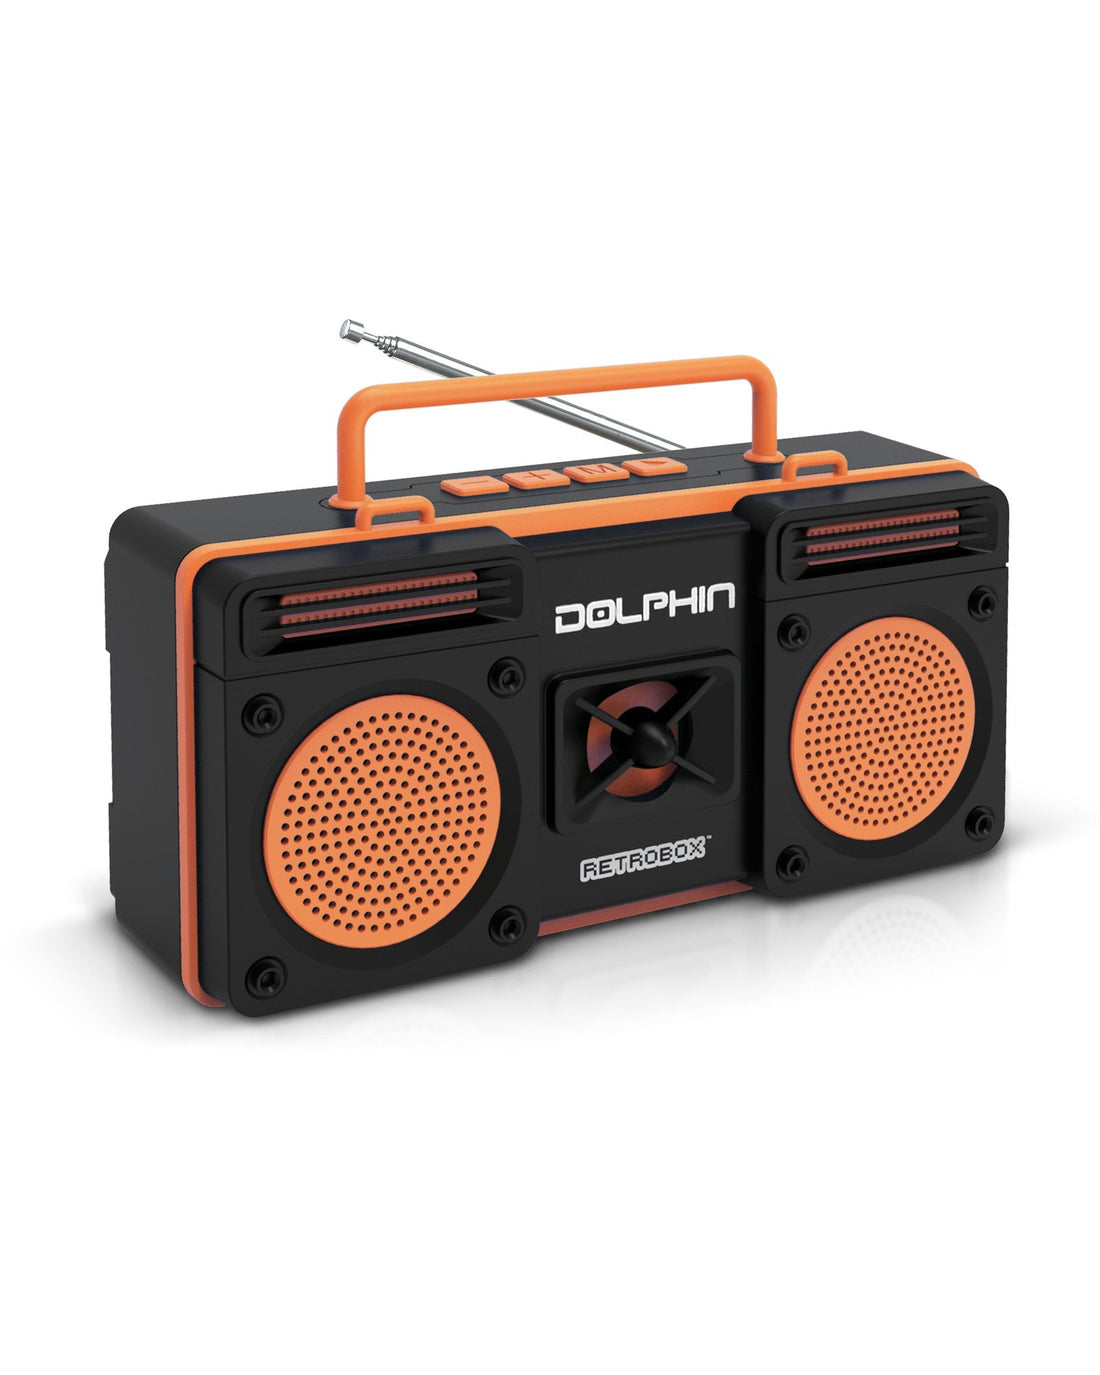 Dolphin RTX-20 Retrobox™ Portable Bluetooth Radio Choose from Colors - Top ElectrosRadioRTX-20 GREEN810059430921